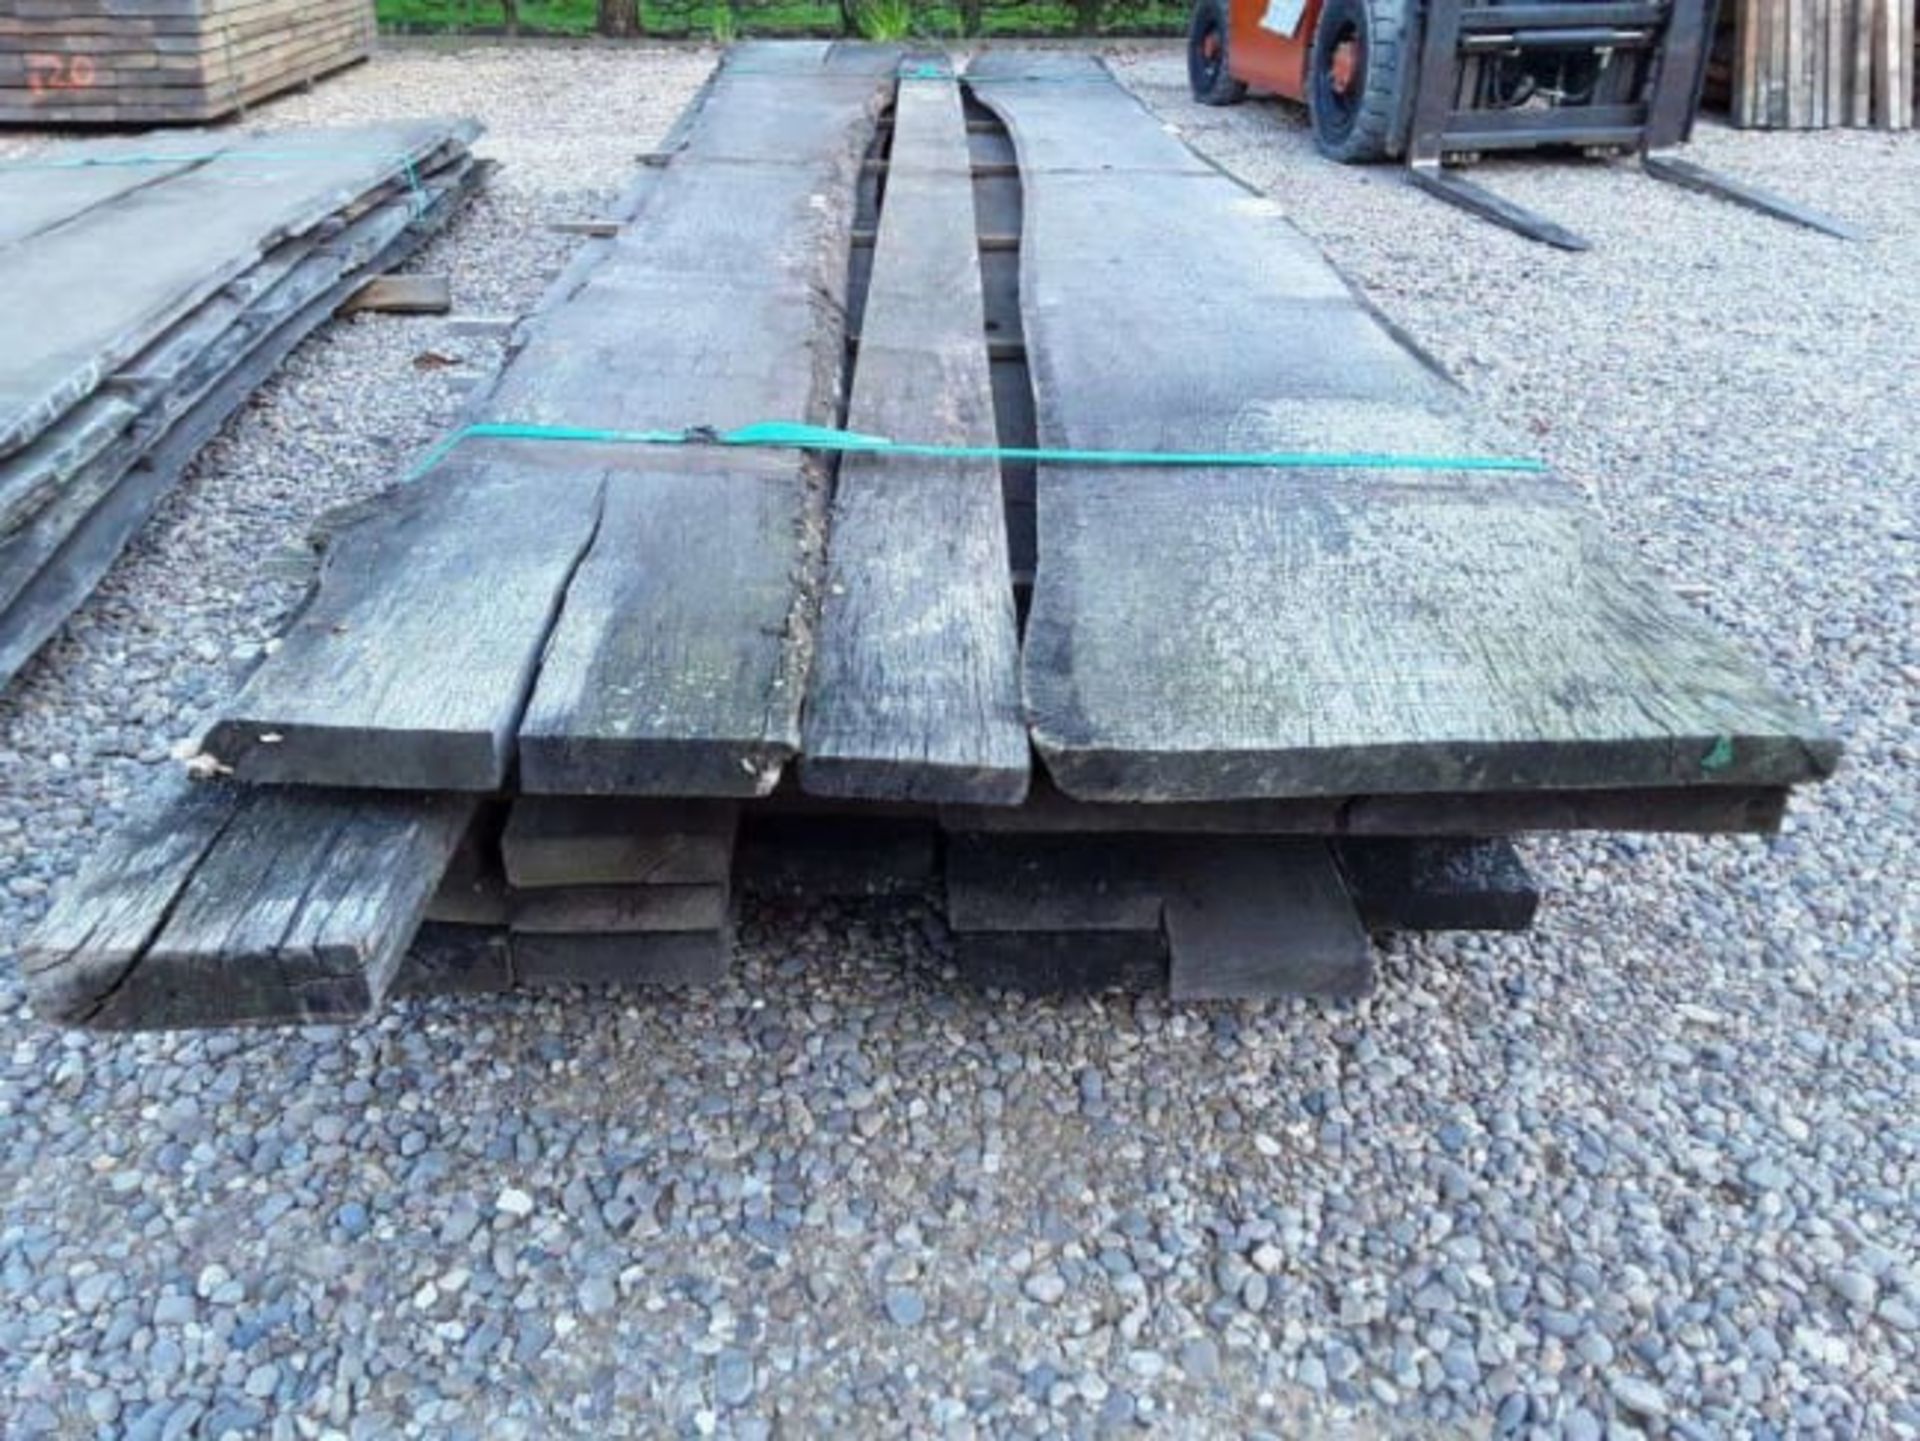 30 x Hardwood Sawn Timber Air Dried Waney Edge / Live Edge / Square Edge English Oak Boards / Sla... - Image 3 of 6